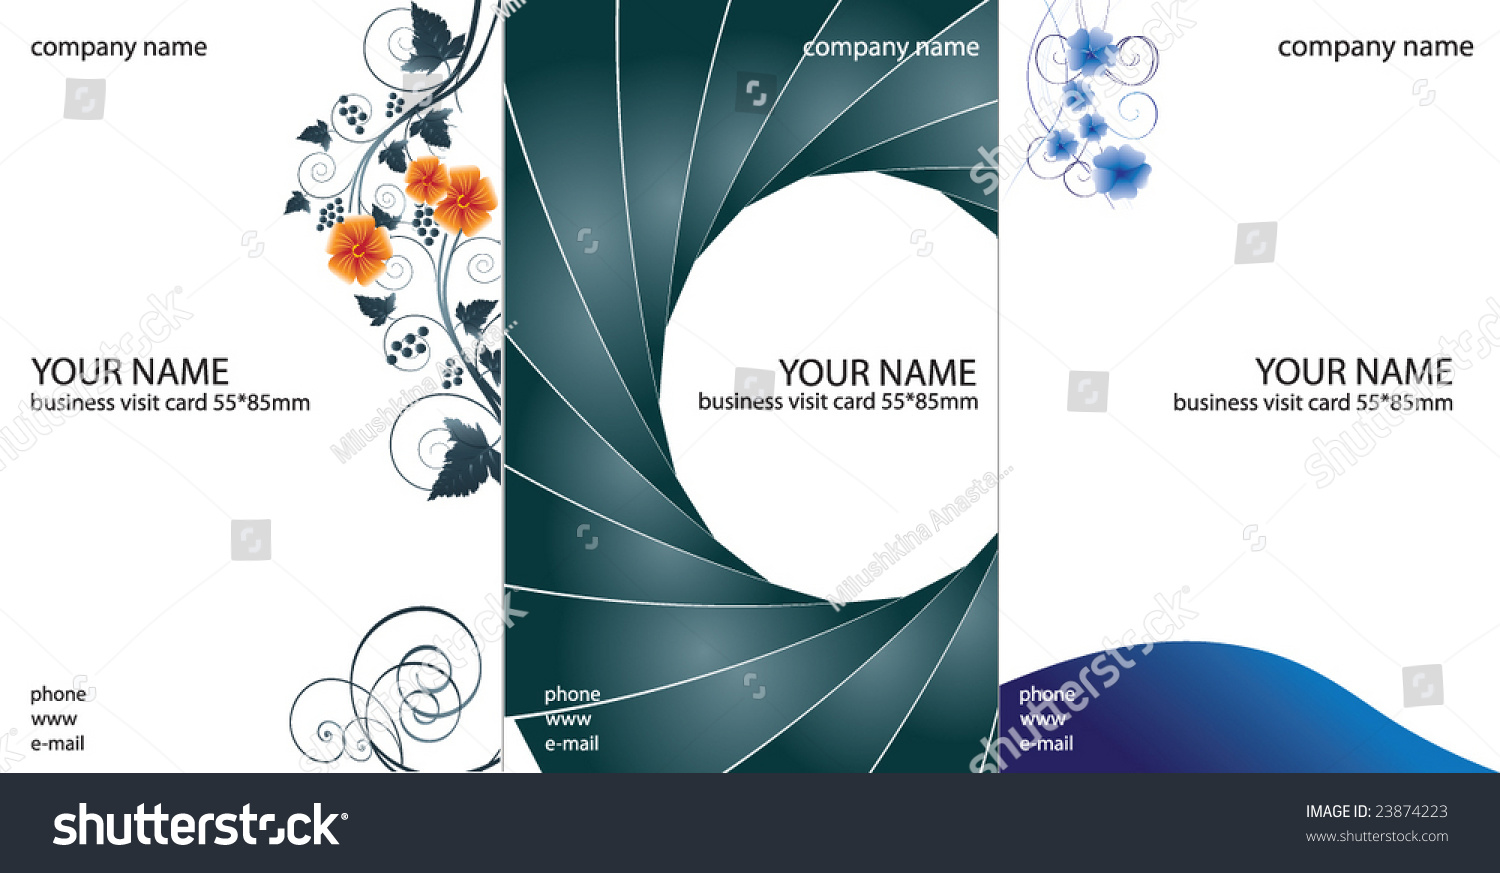 Abstract Business Visit Card Design. Vector - 23874223 : Shutterstock